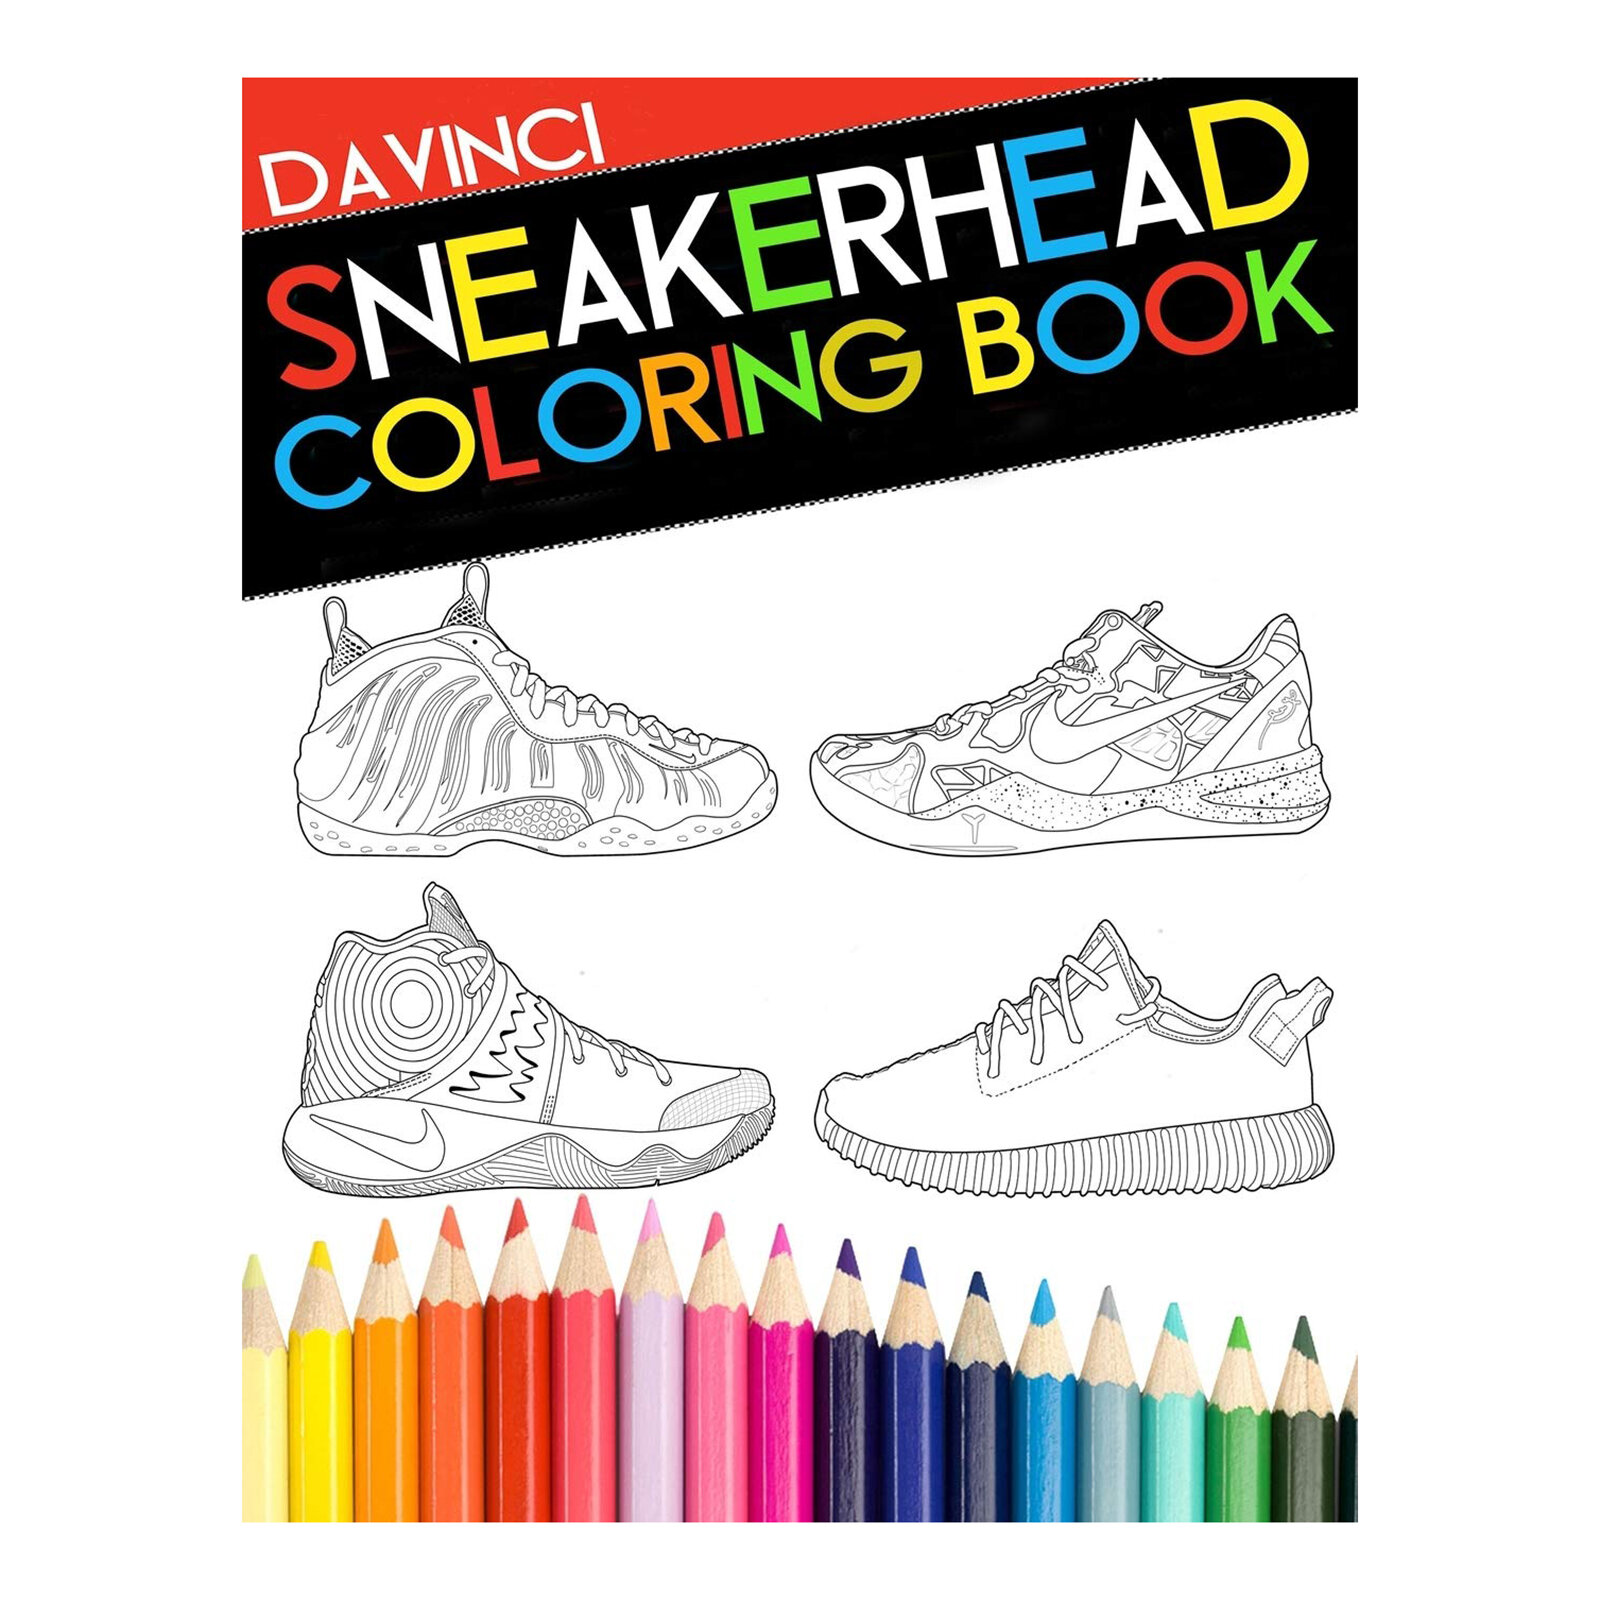 Sneakerhead Coloring book, DaVinci,  $9.76